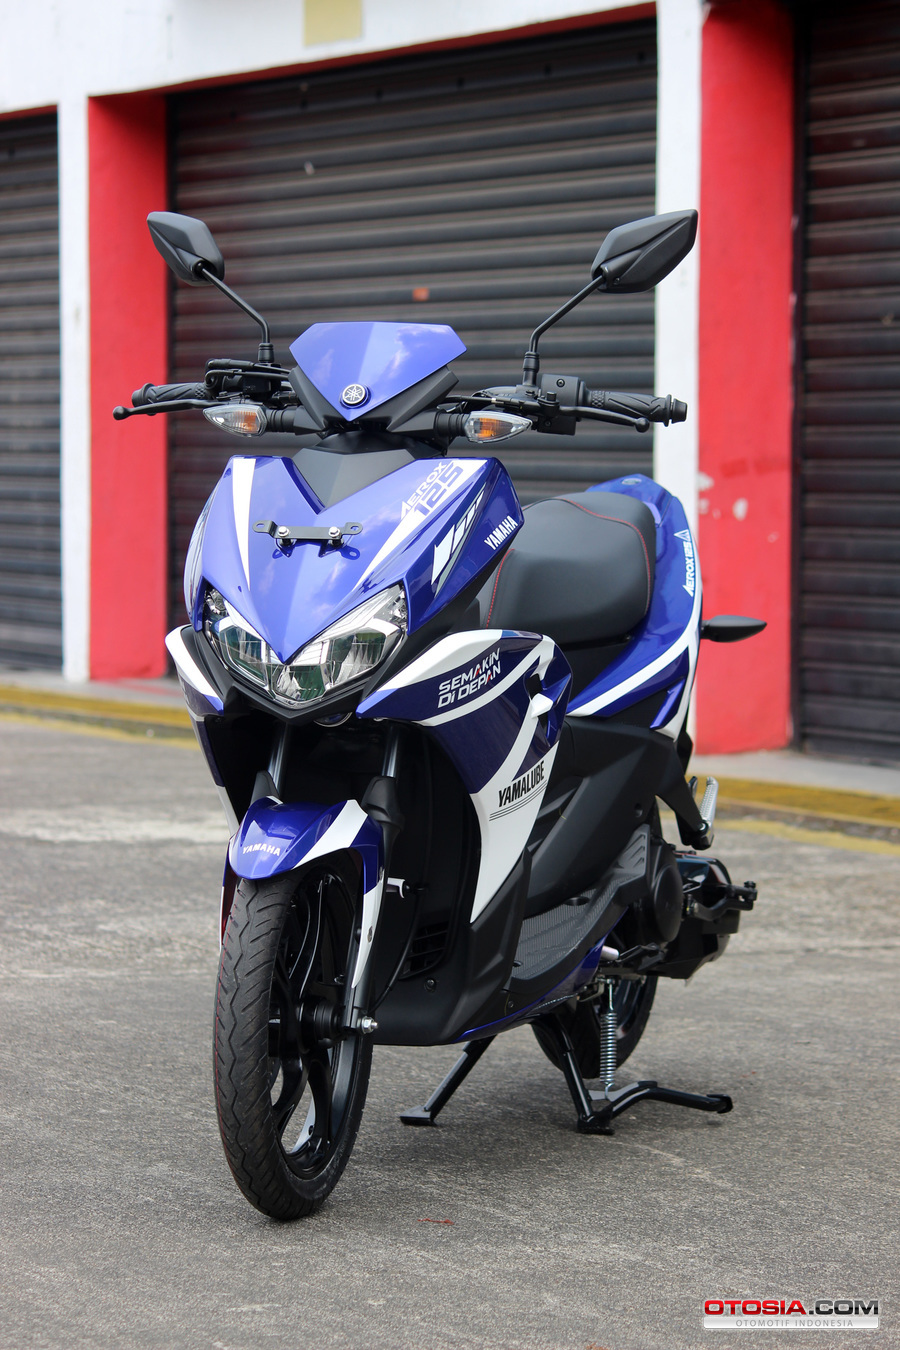 Khusus Indonesia Skutik Yamaha Aerox Pakai Mesin Besar Otosiacom